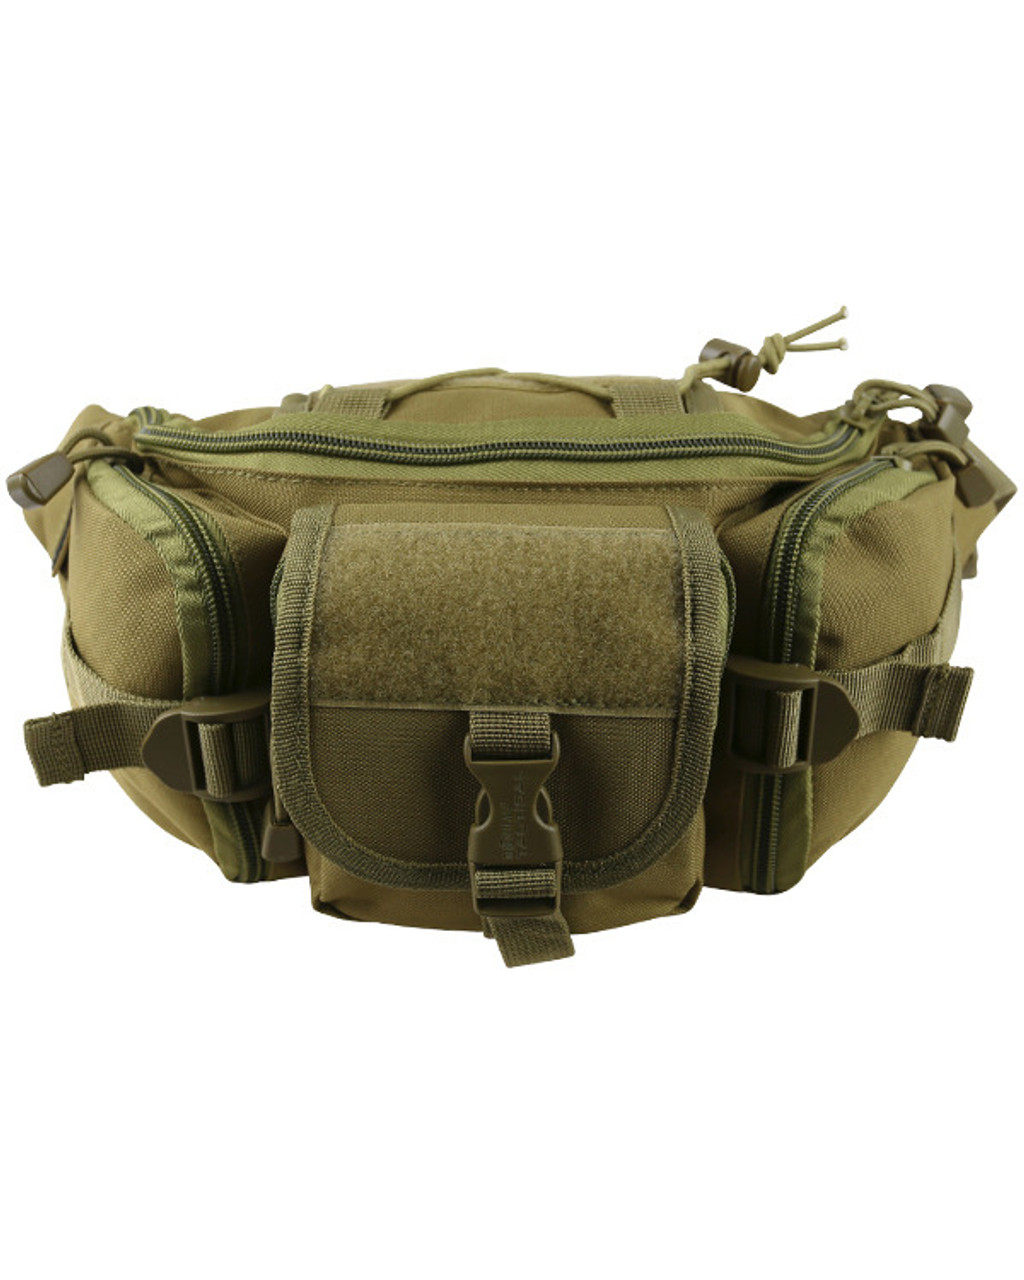 Tactical Waist Bag - Coyote - Jax First Aid